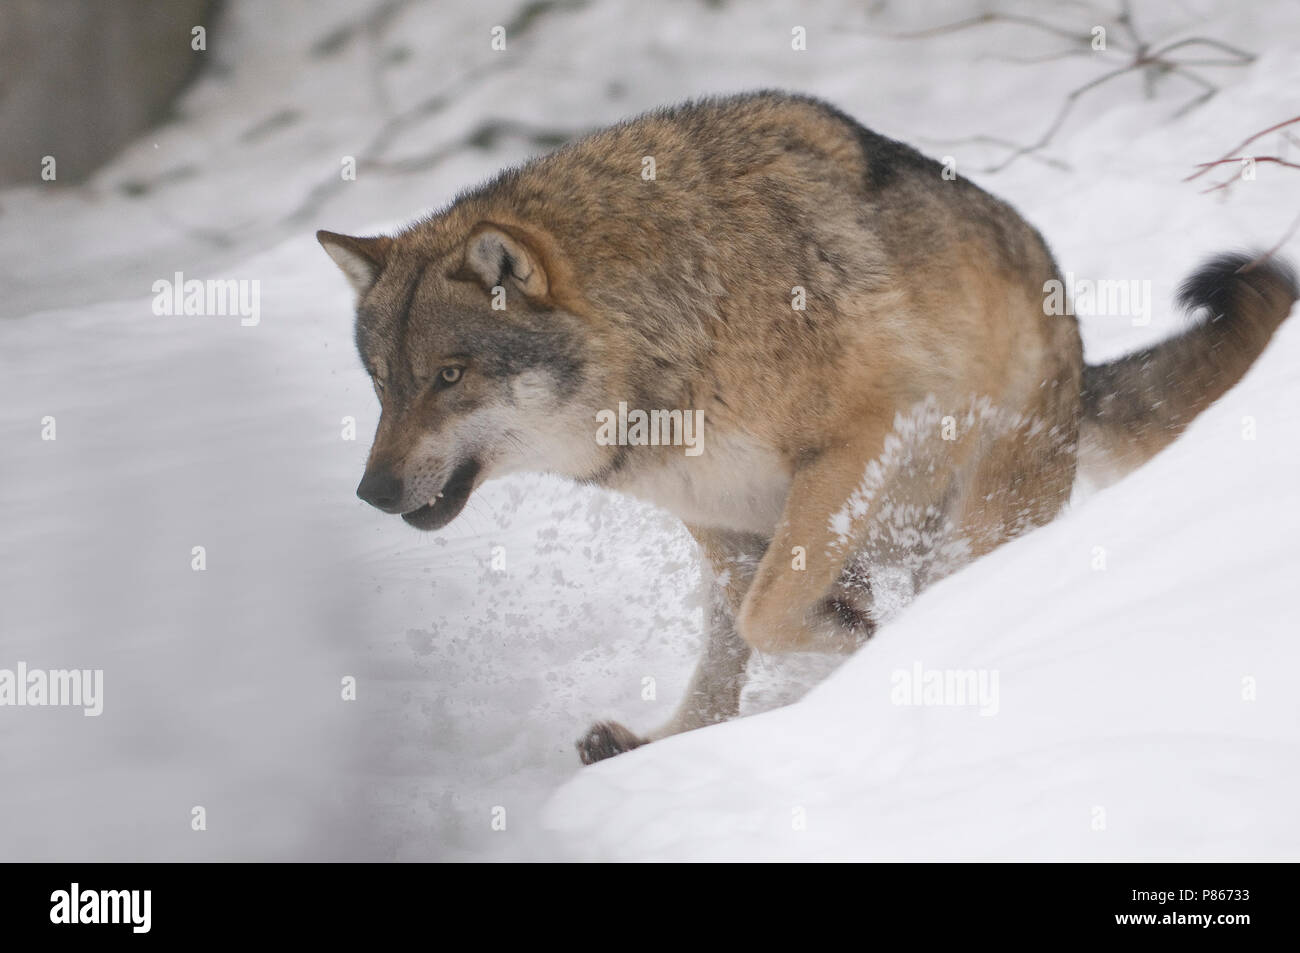 Europese Wolf in de sneeuw; European Wolf in snow Stock Photo